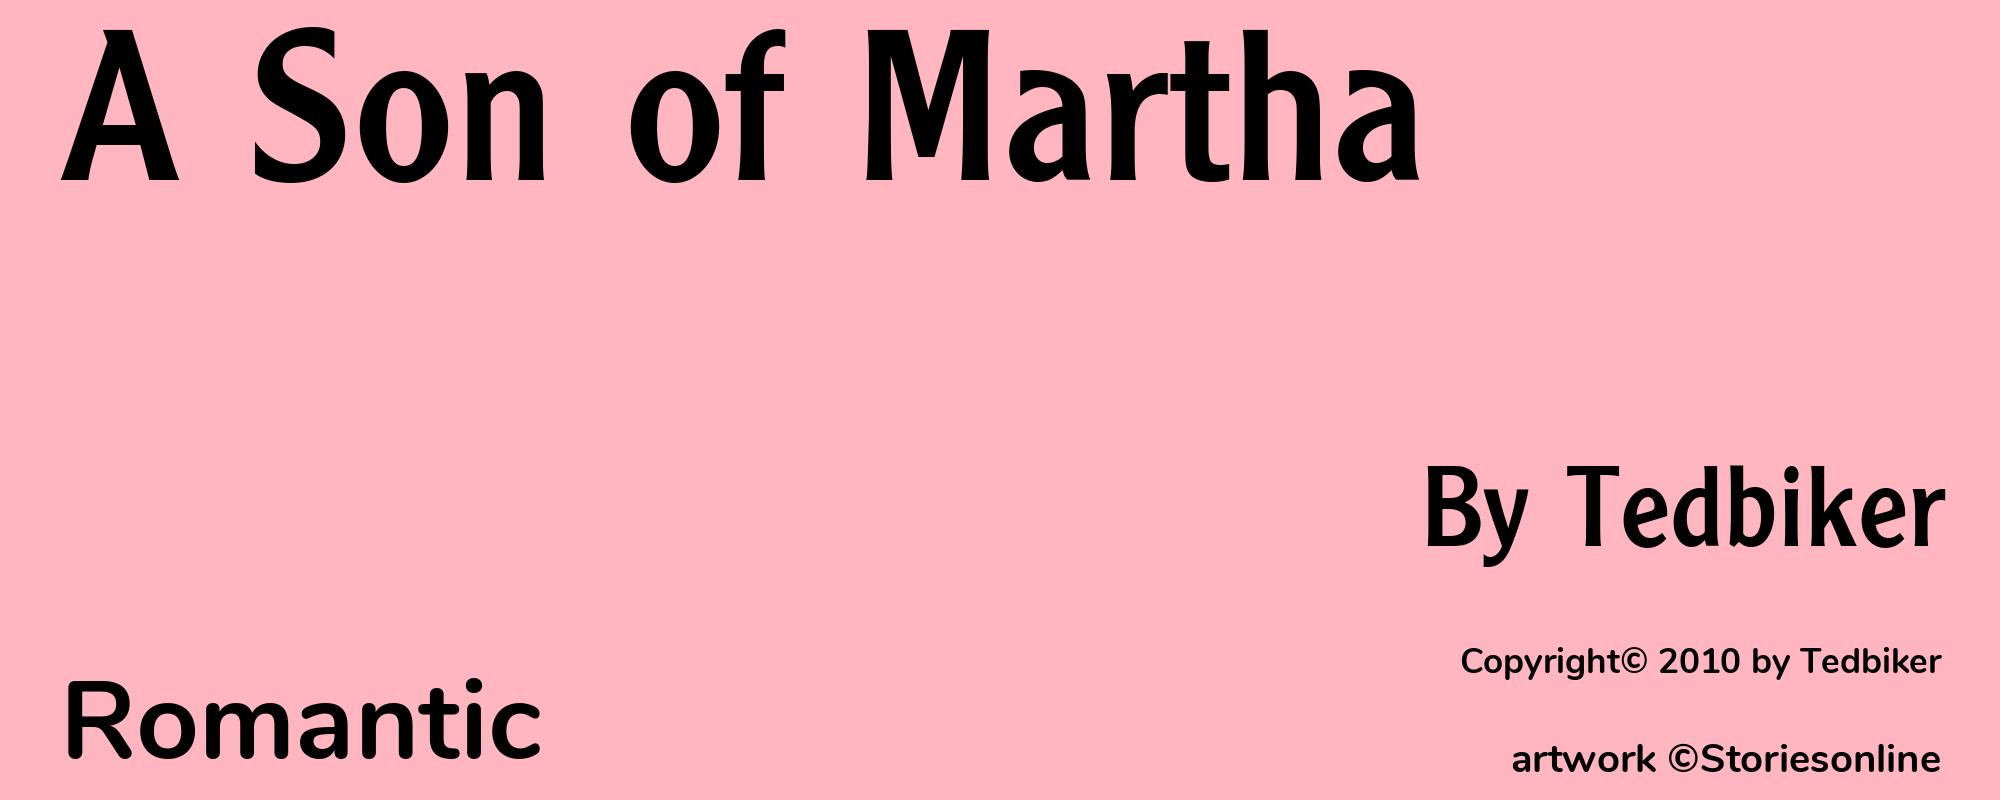 A Son of Martha - Cover